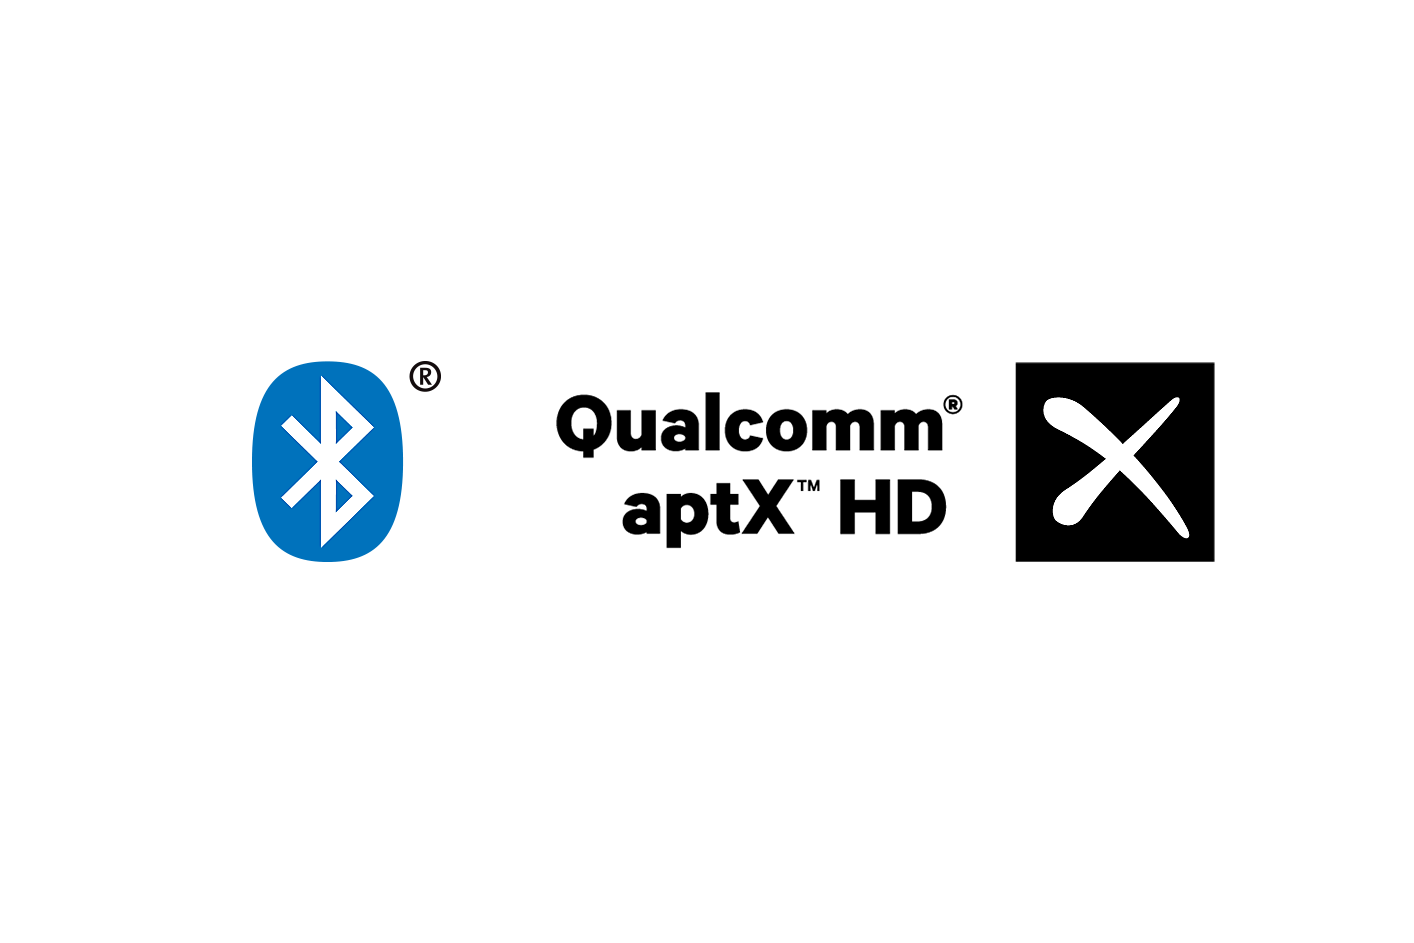 Bluetooth and Qualcomm aptX HD logo's.